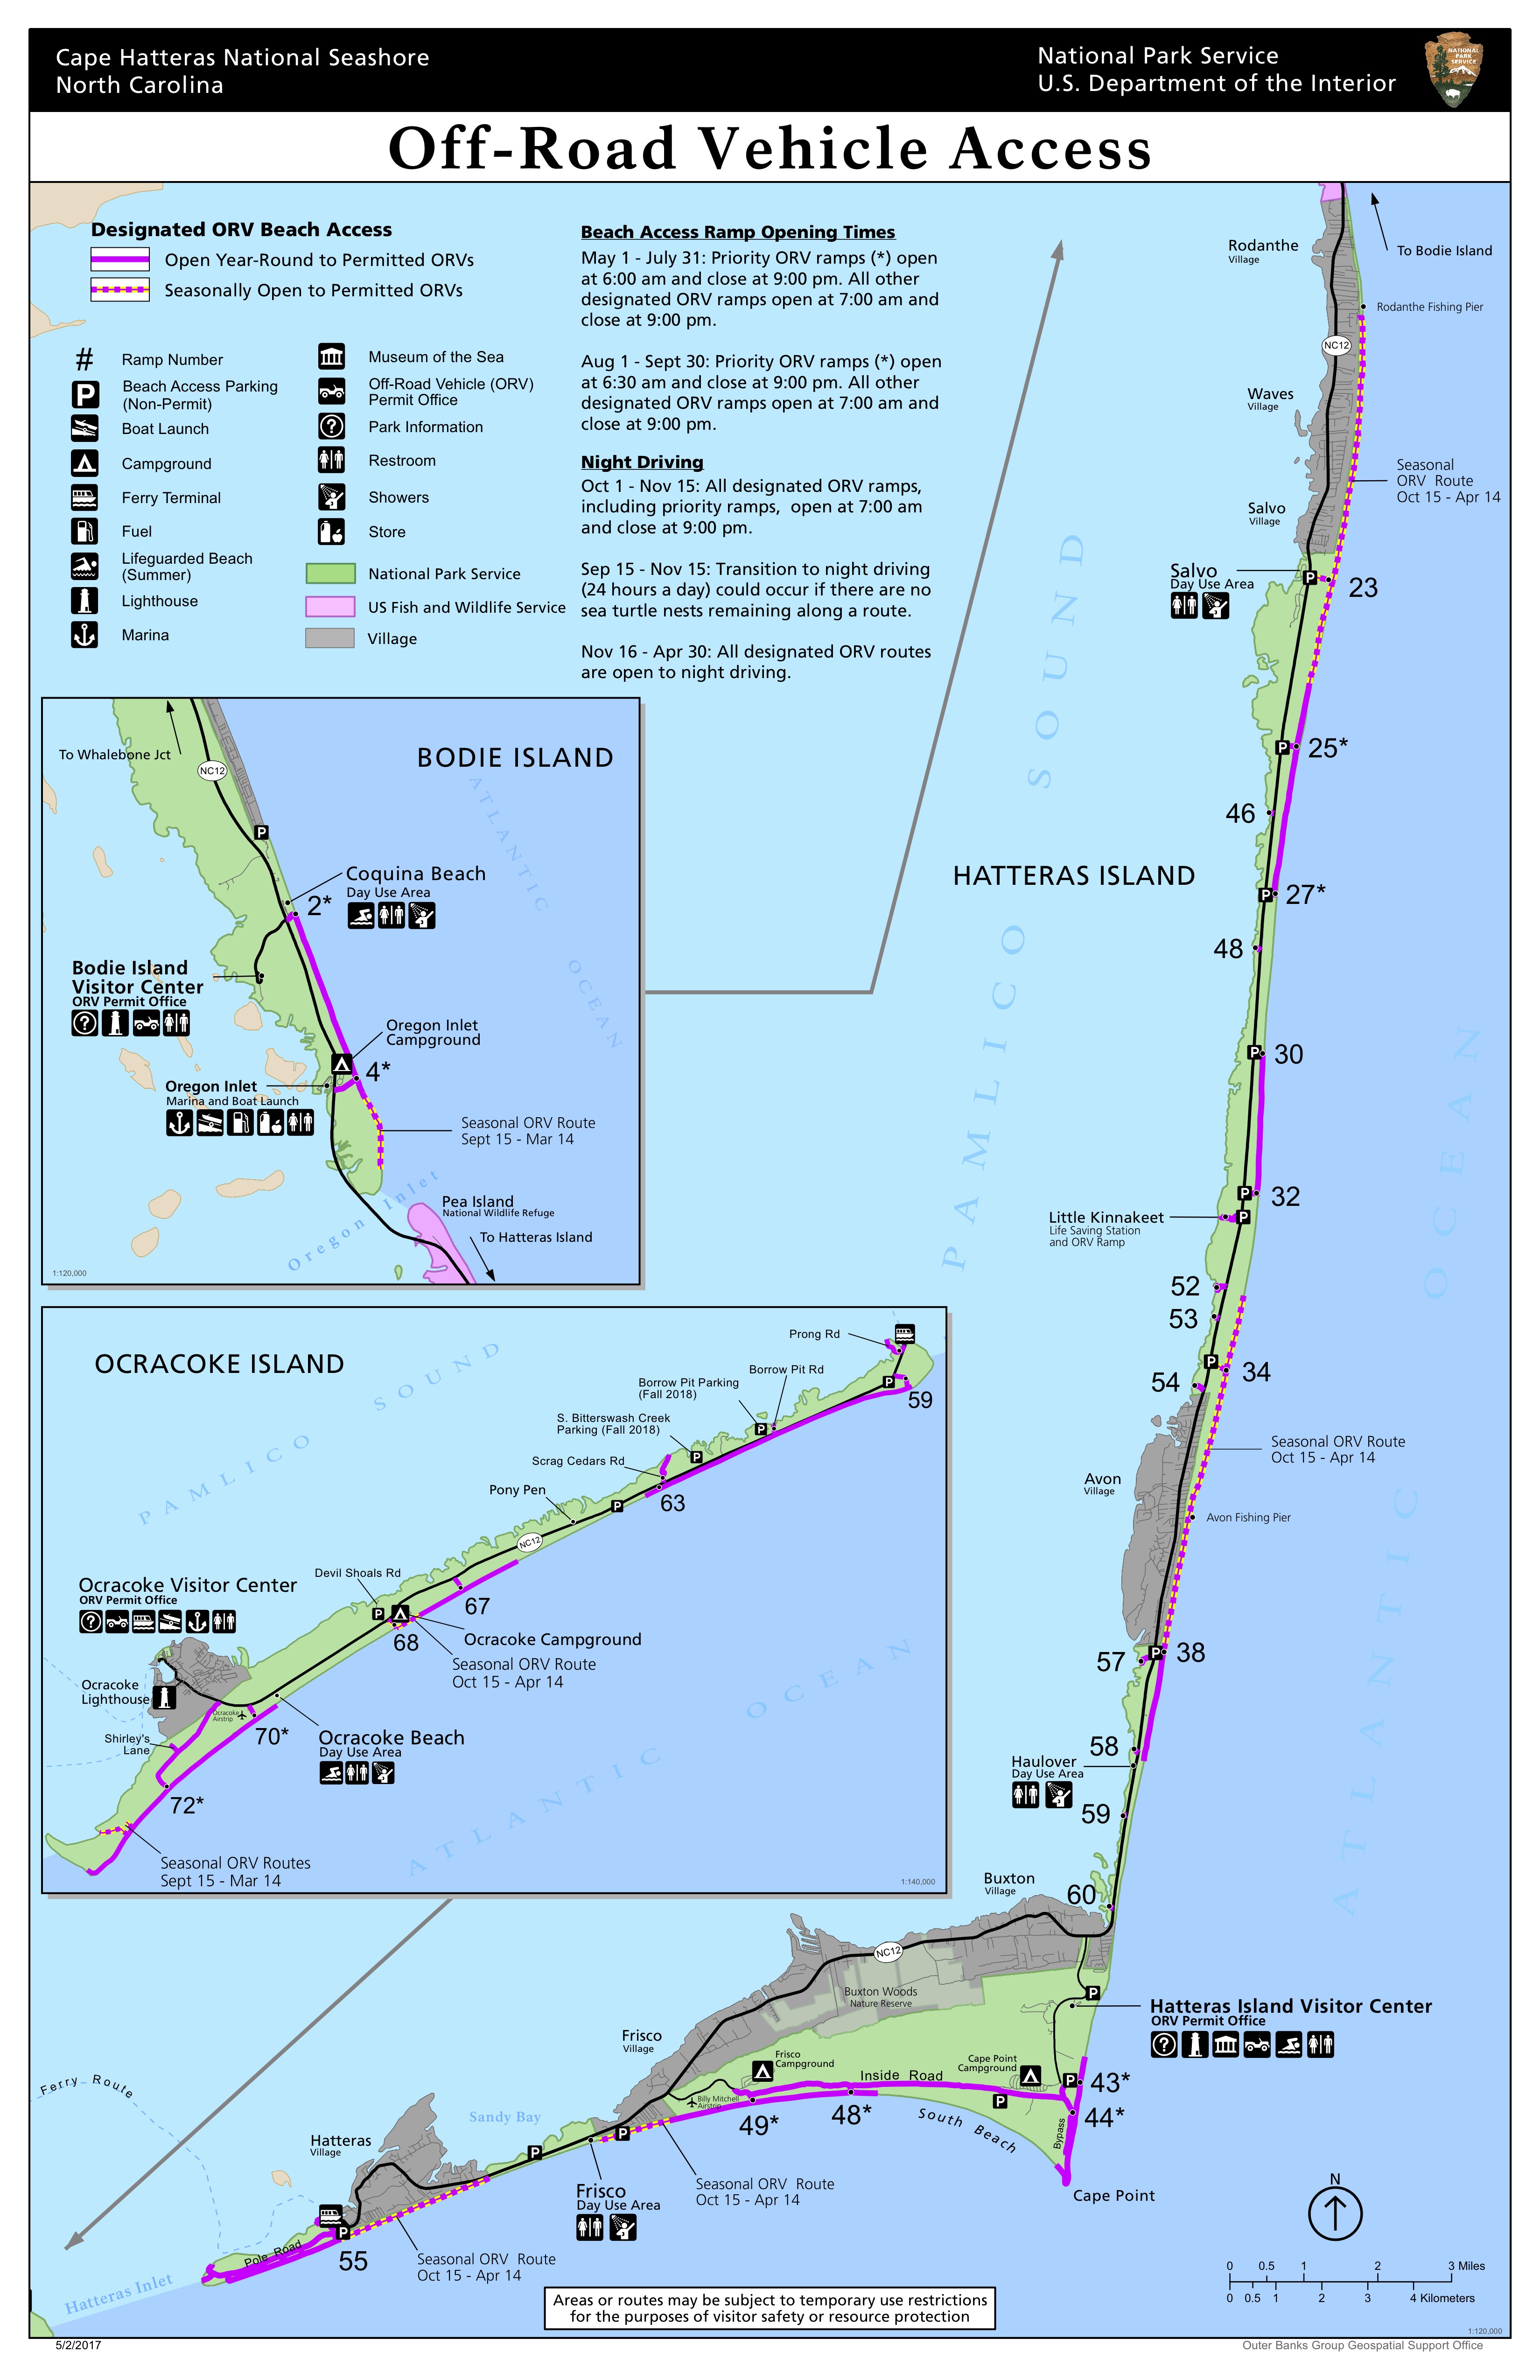 Cape Hatteras National Seashore Off-Road Vehicle Map